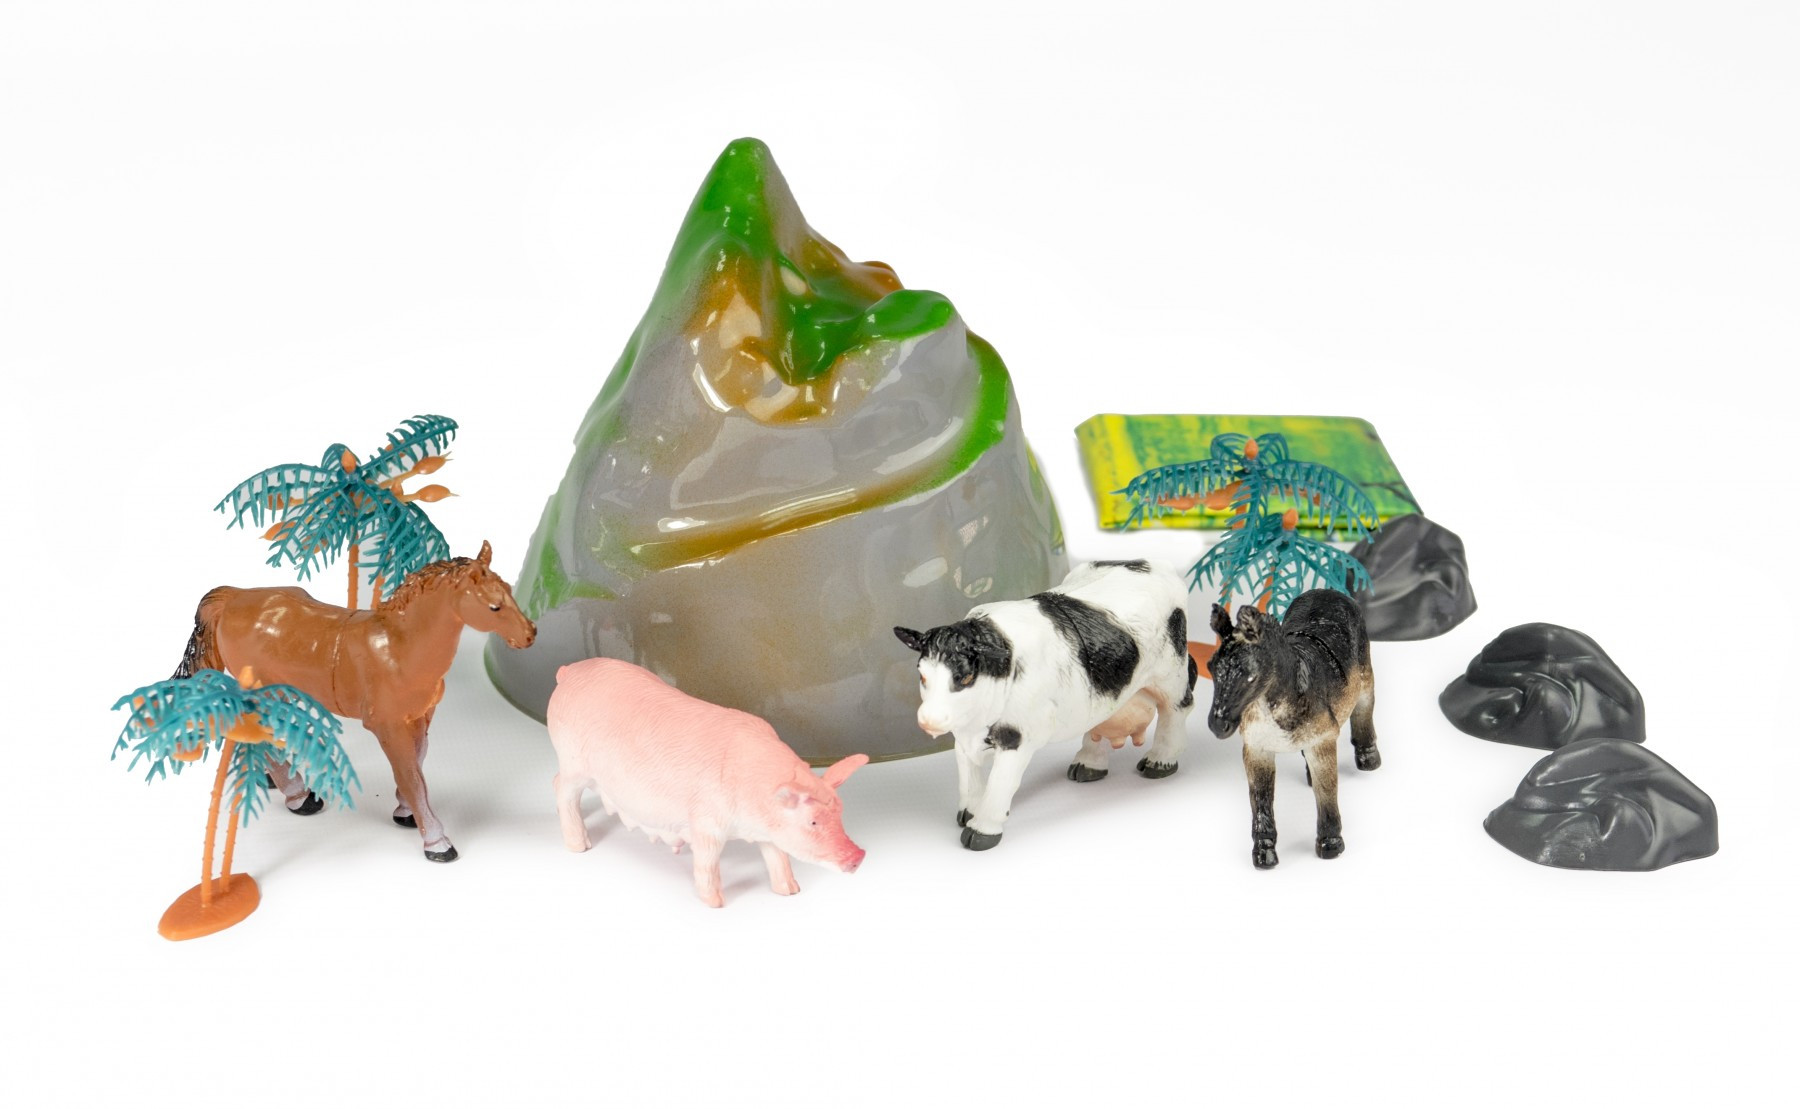 Plastic Farm Animals toys